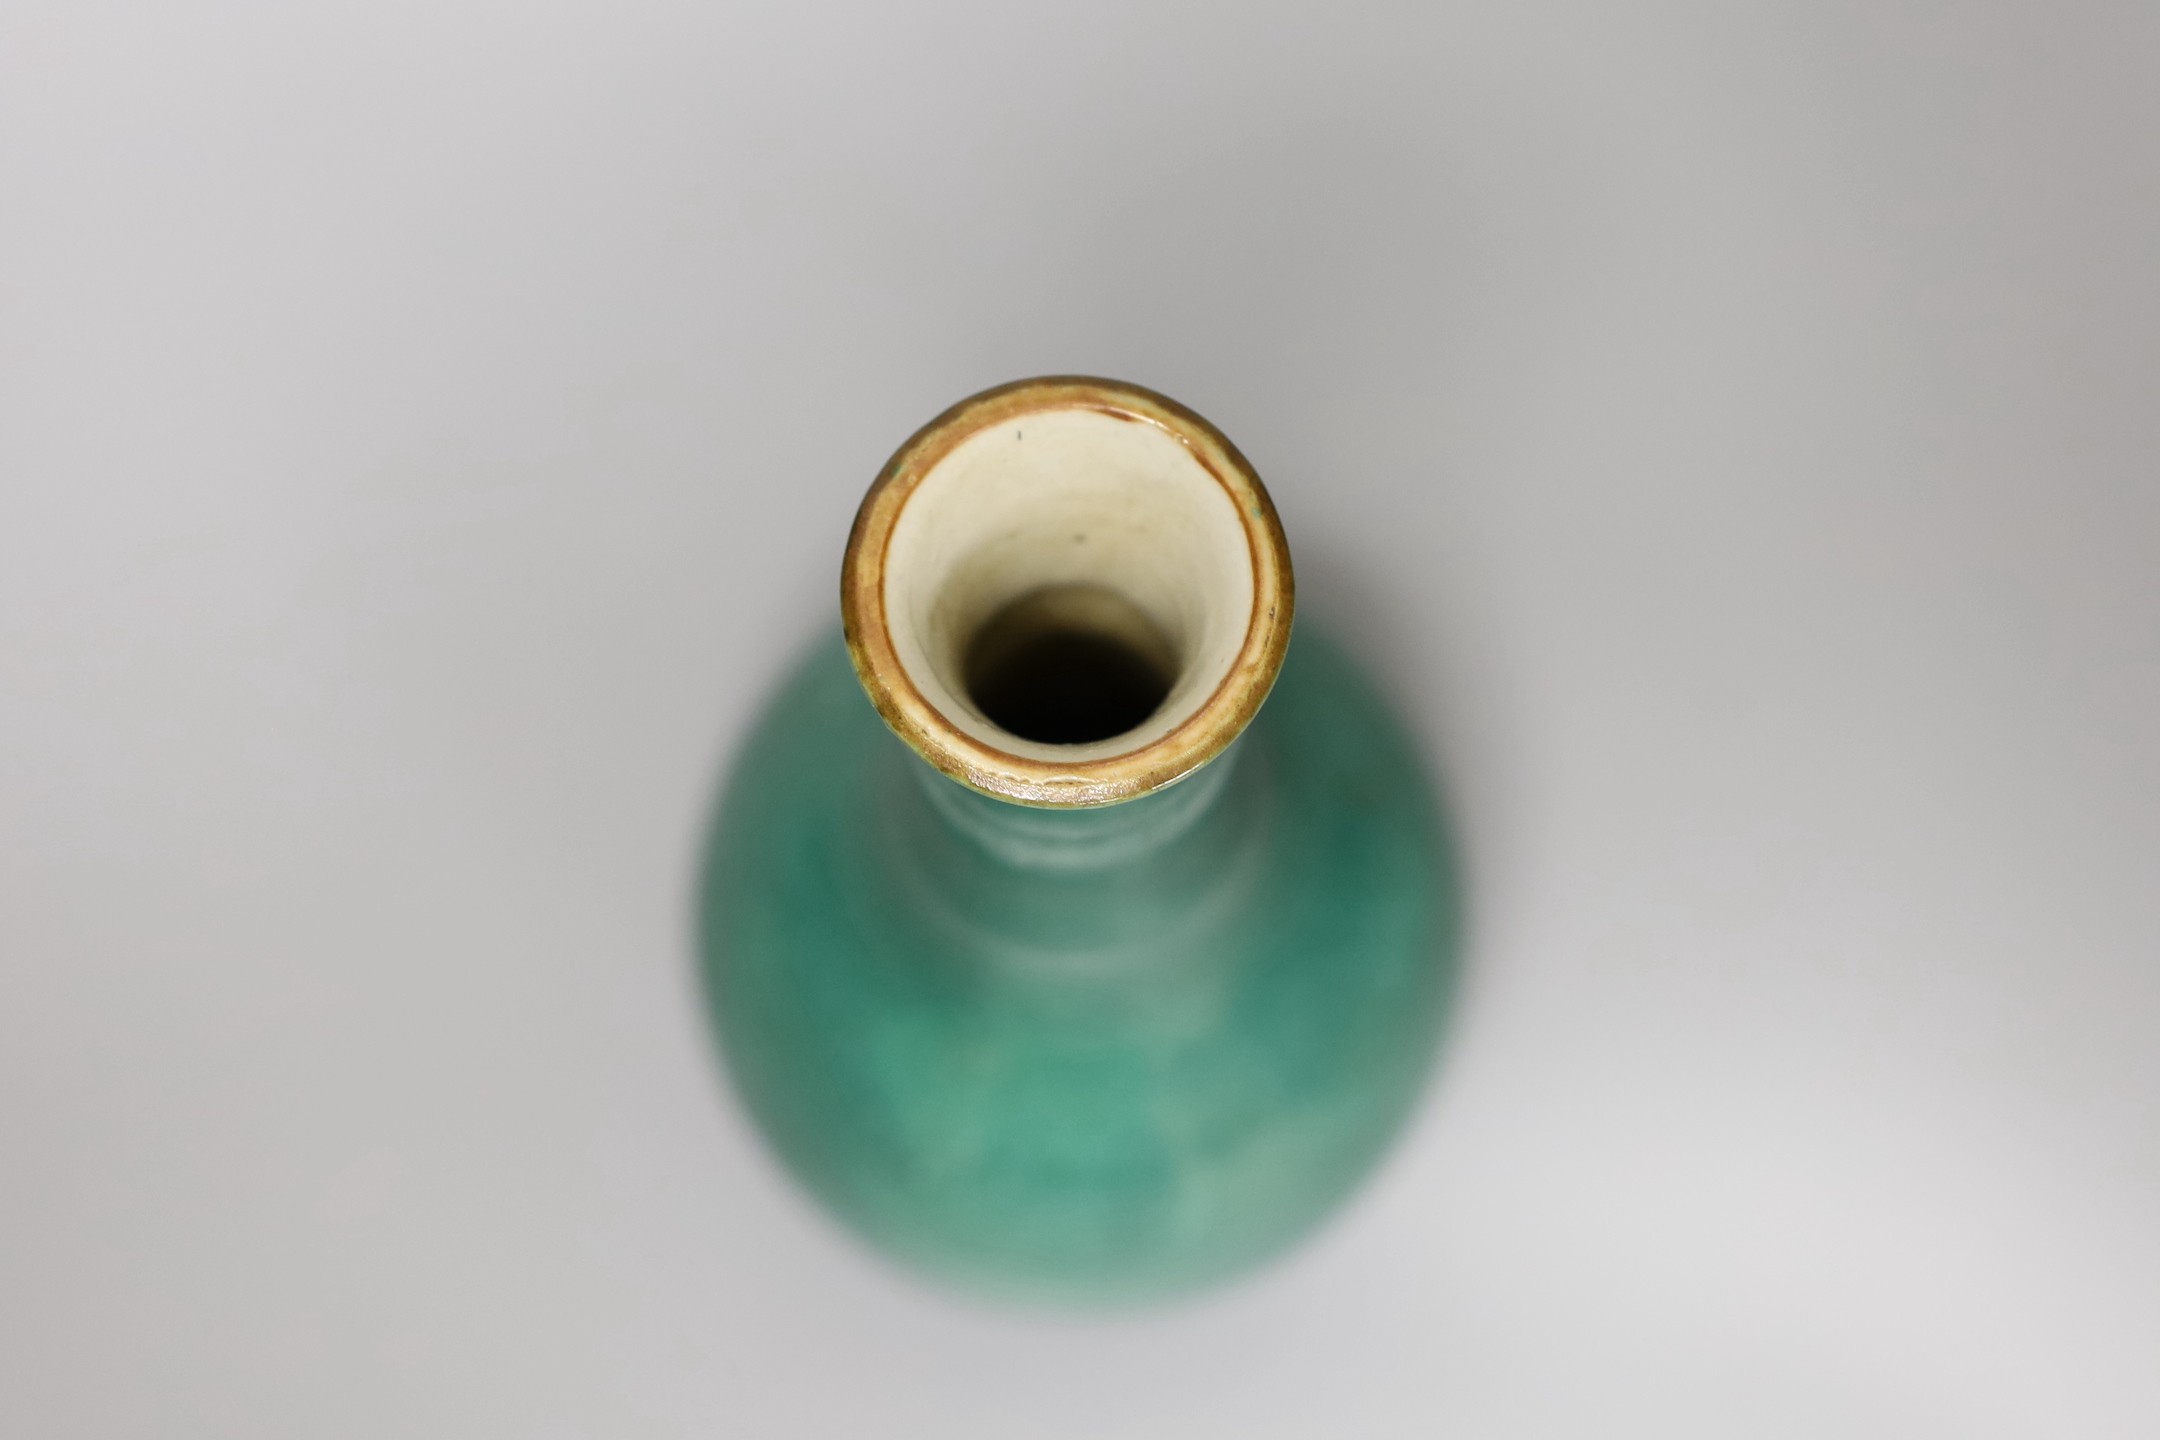 A Chinese green monochrome glazed vase, 19.5cm